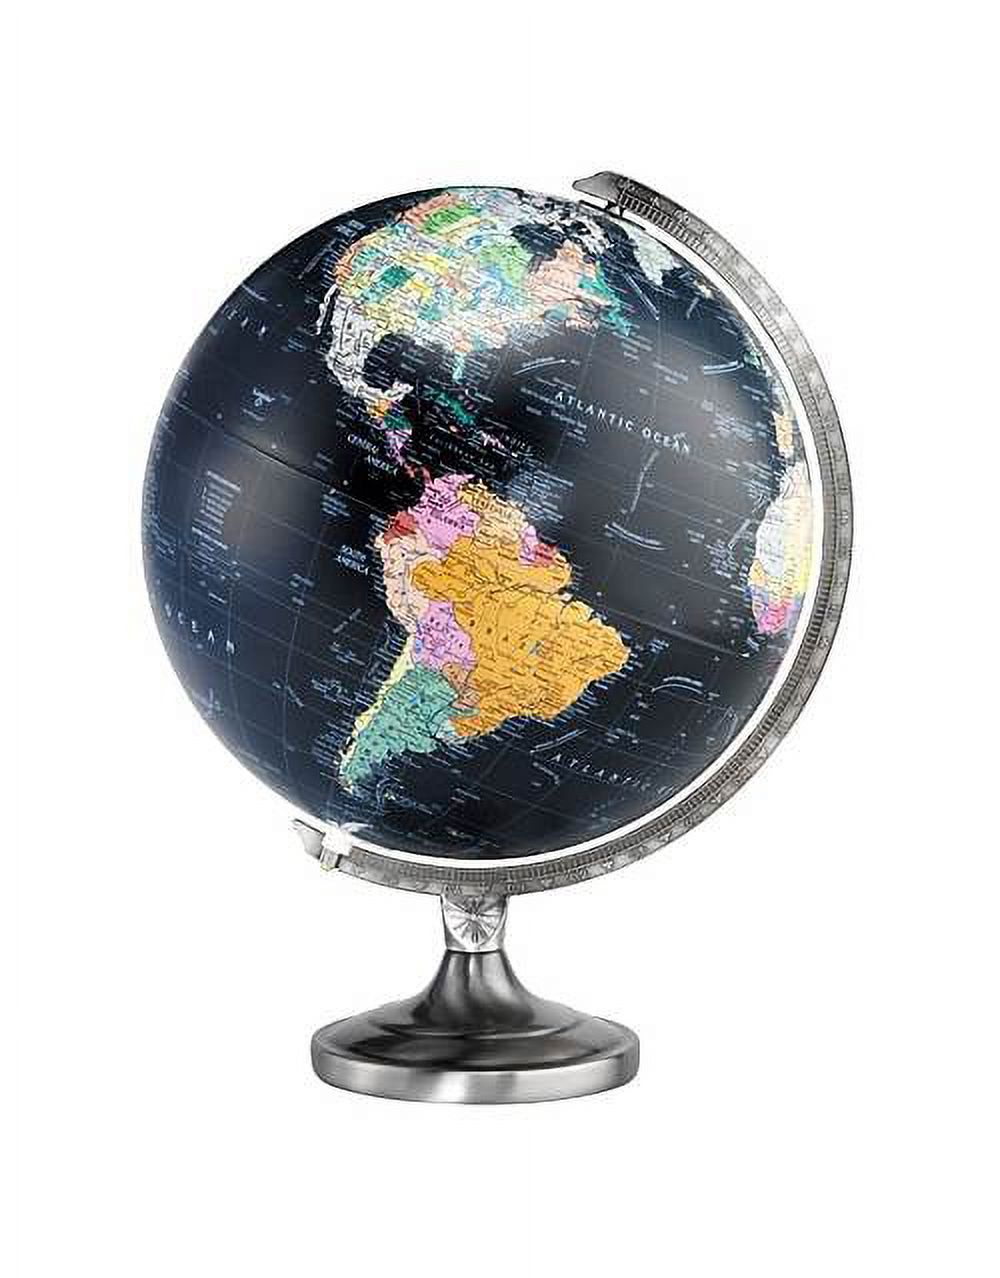 Herff Jones Orion Illuminated Desktop World Globe - image 1 of 3